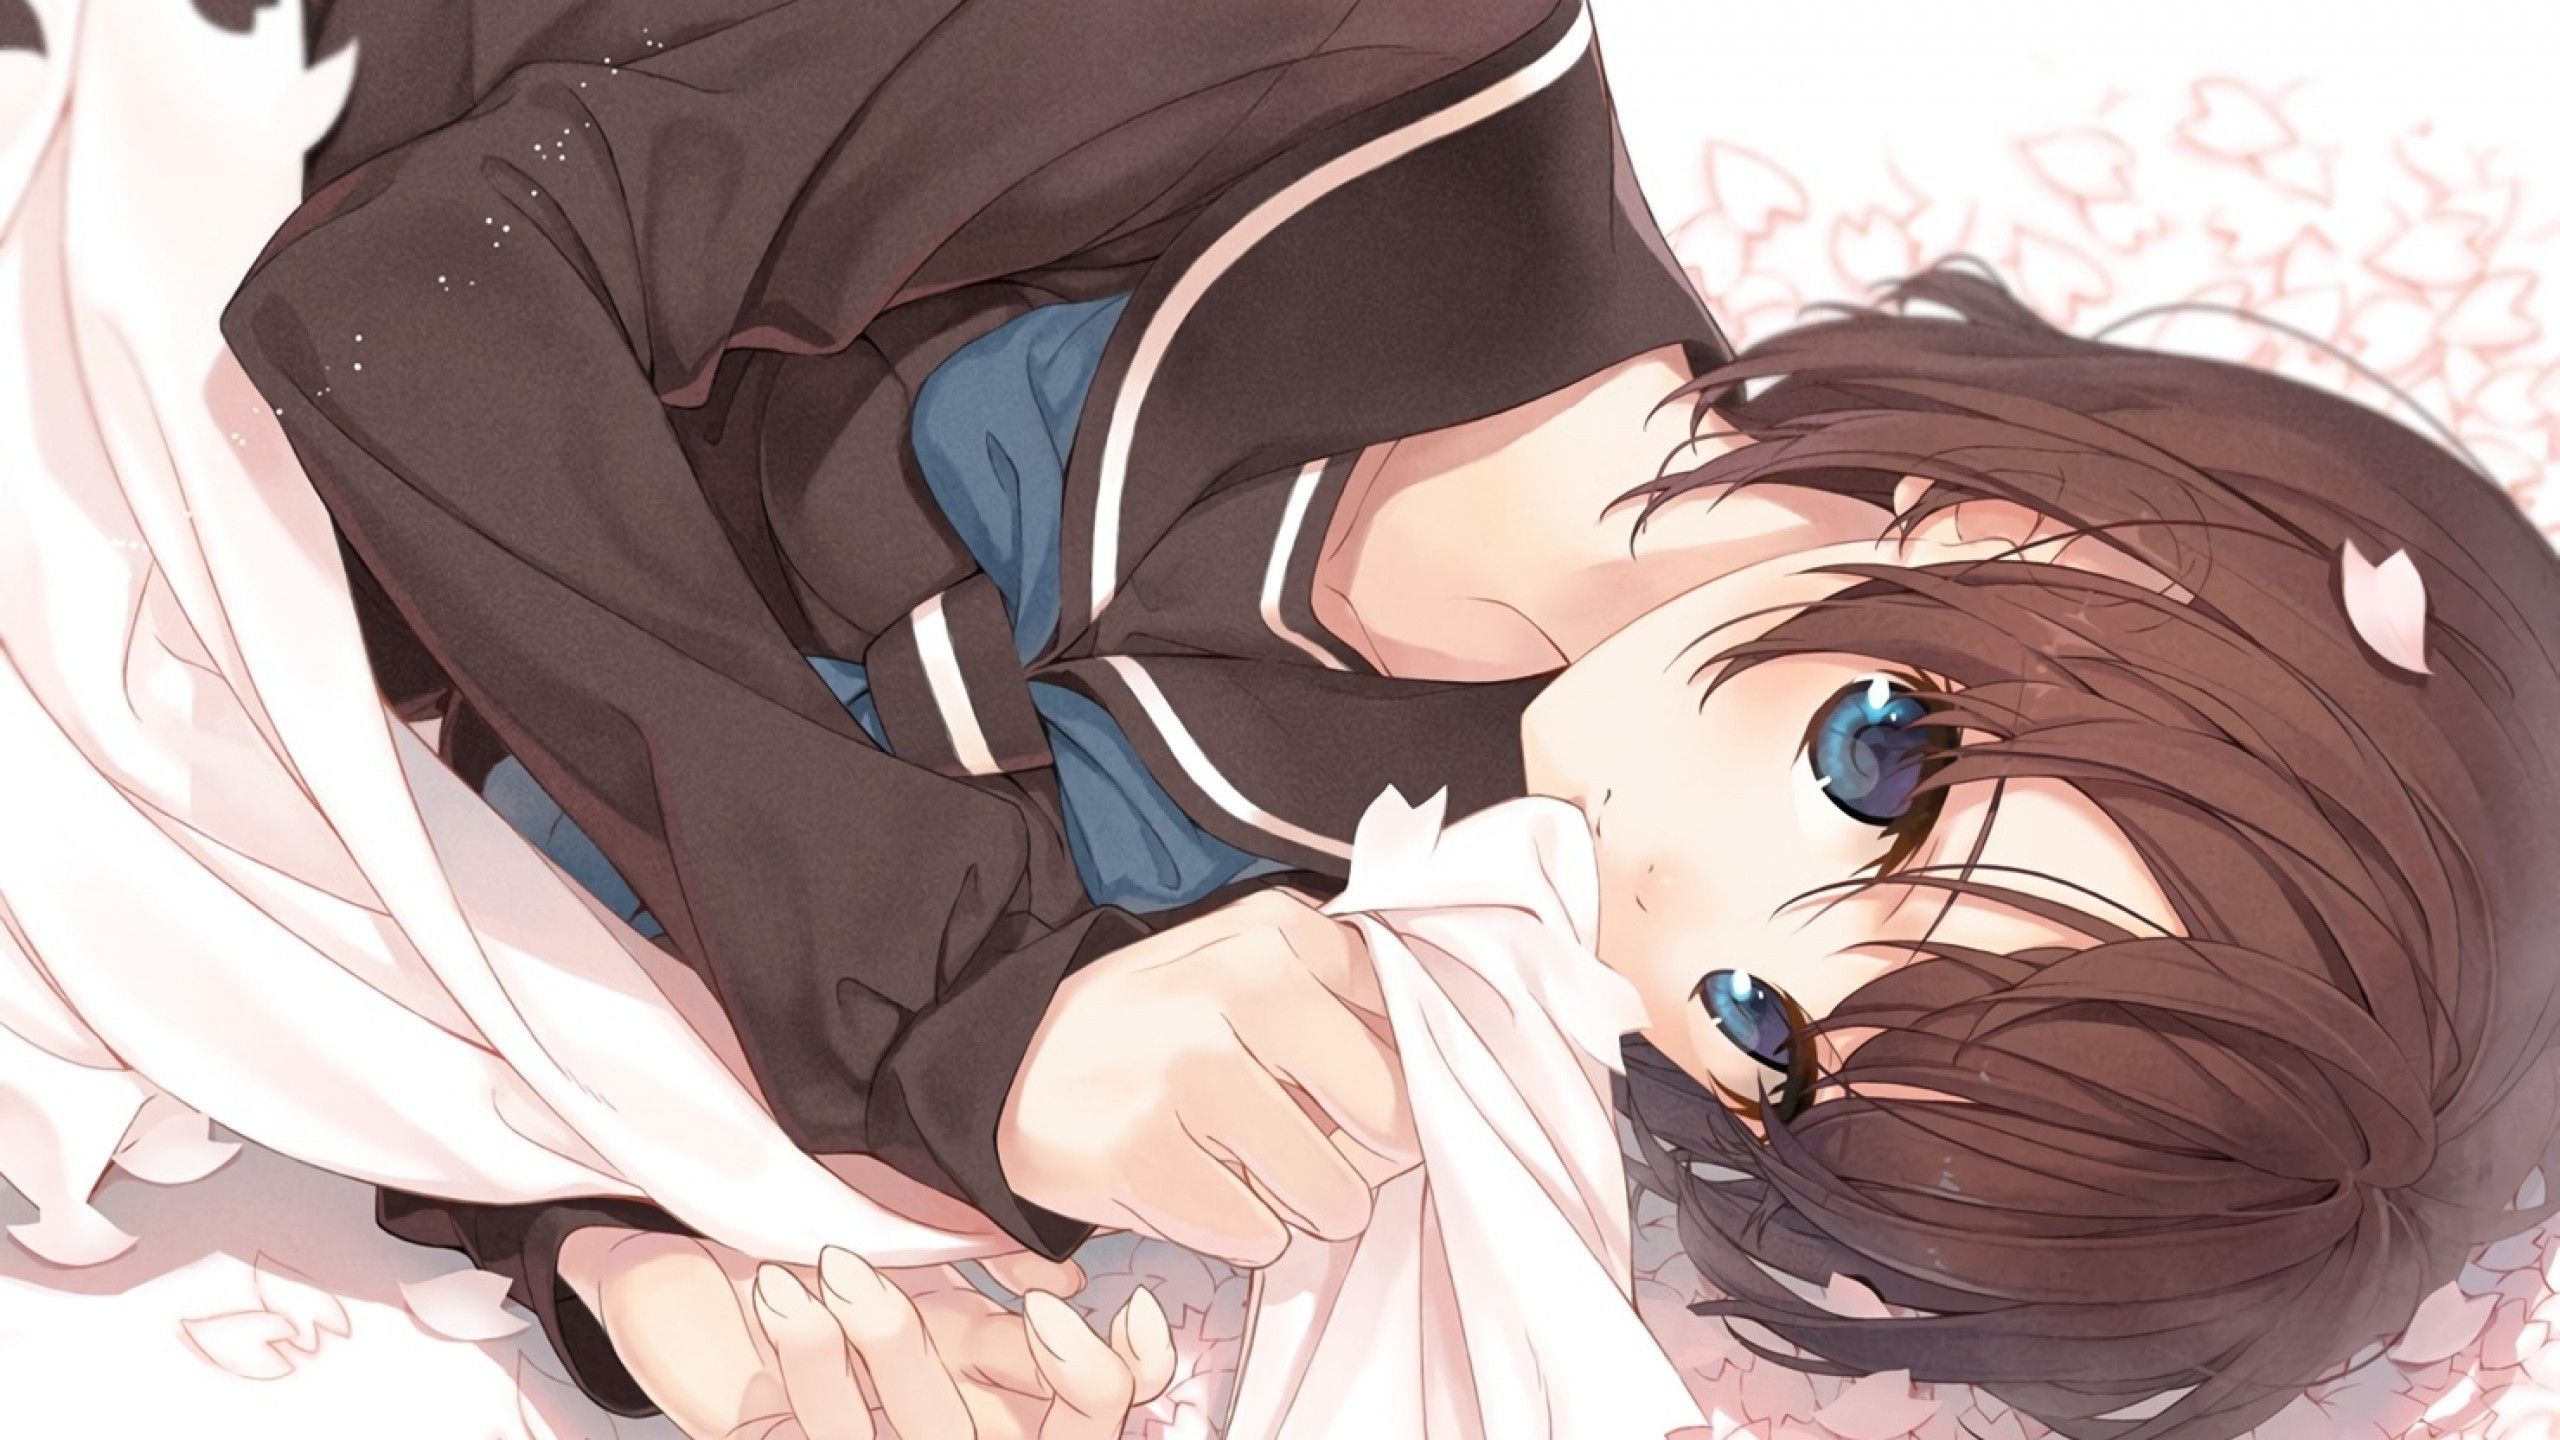 Download 2560x1440 Anime Girl, Lying Down, Short Hair, Blue Eyes, Brown Hair Wallpaper for iMac 27 inch